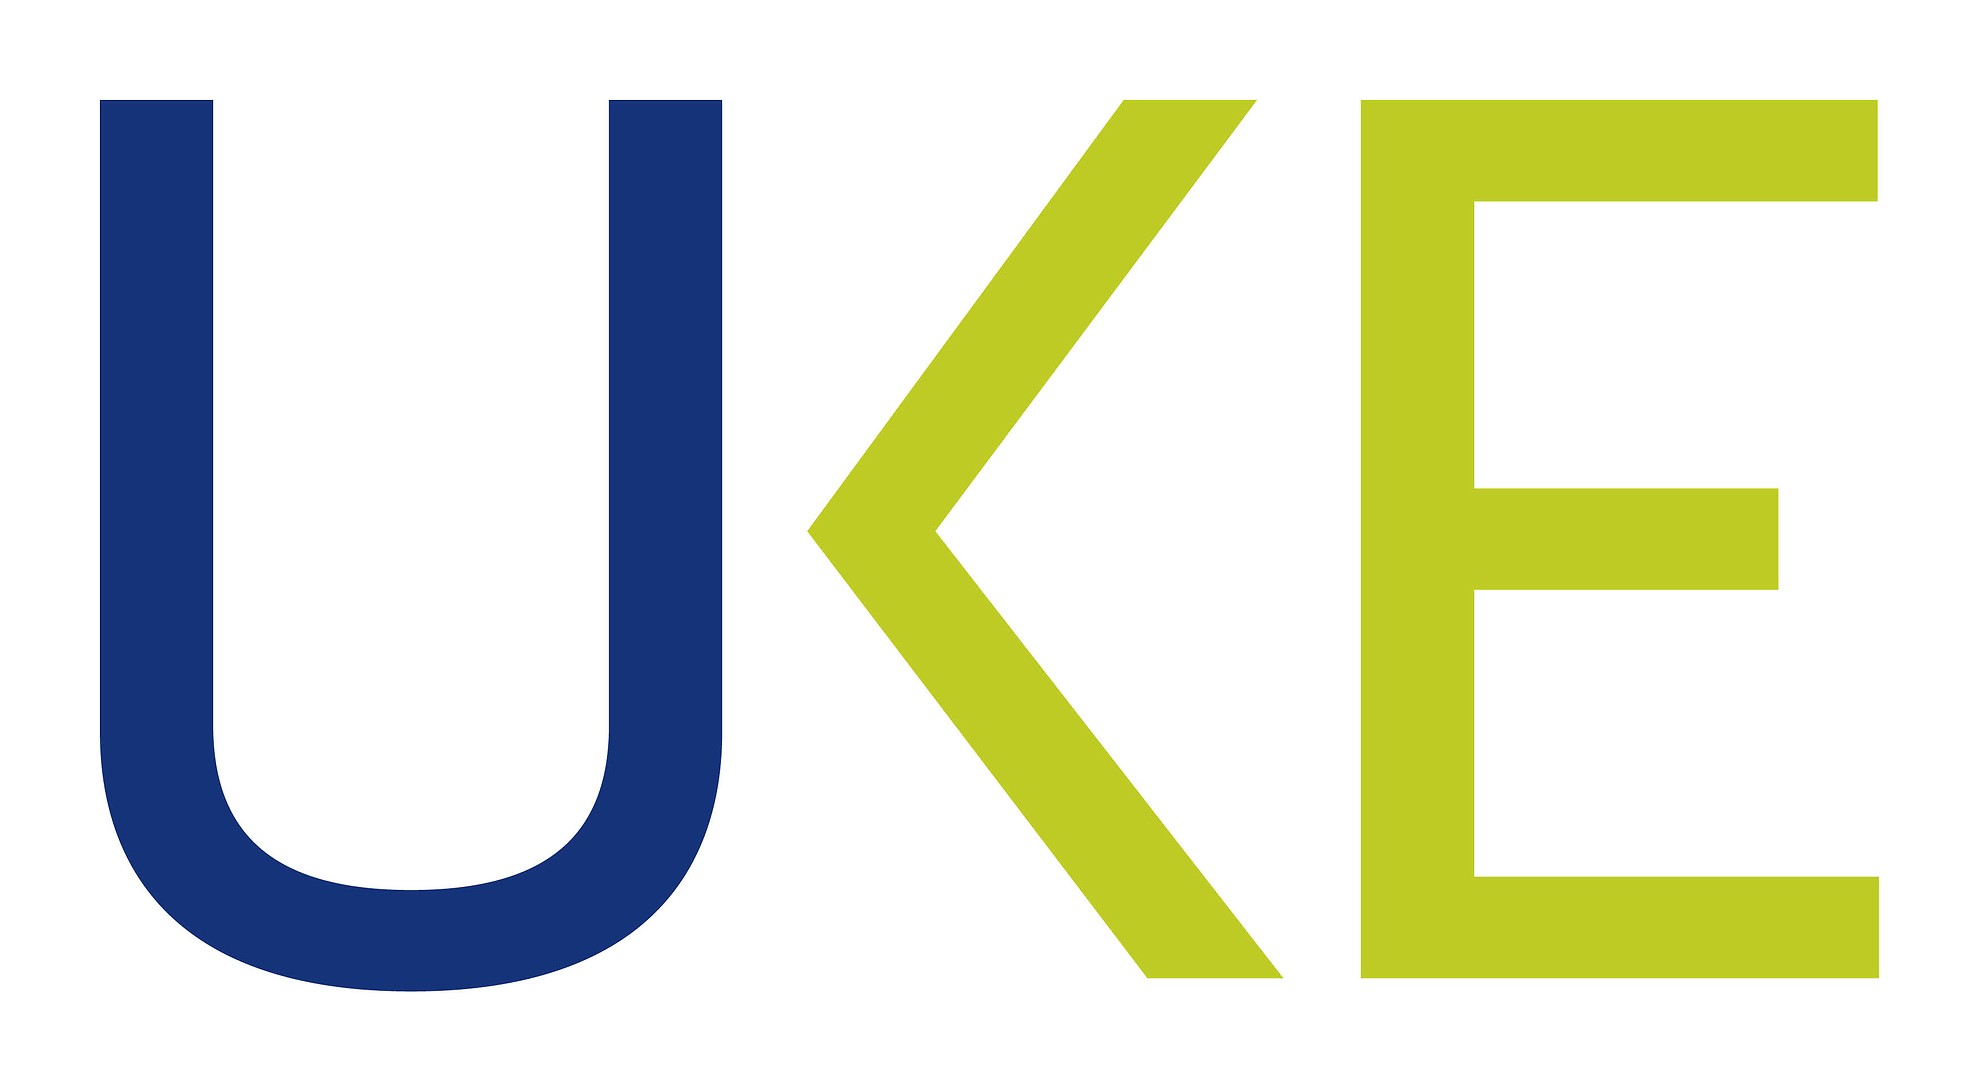 The image shows the UKE logoPoland